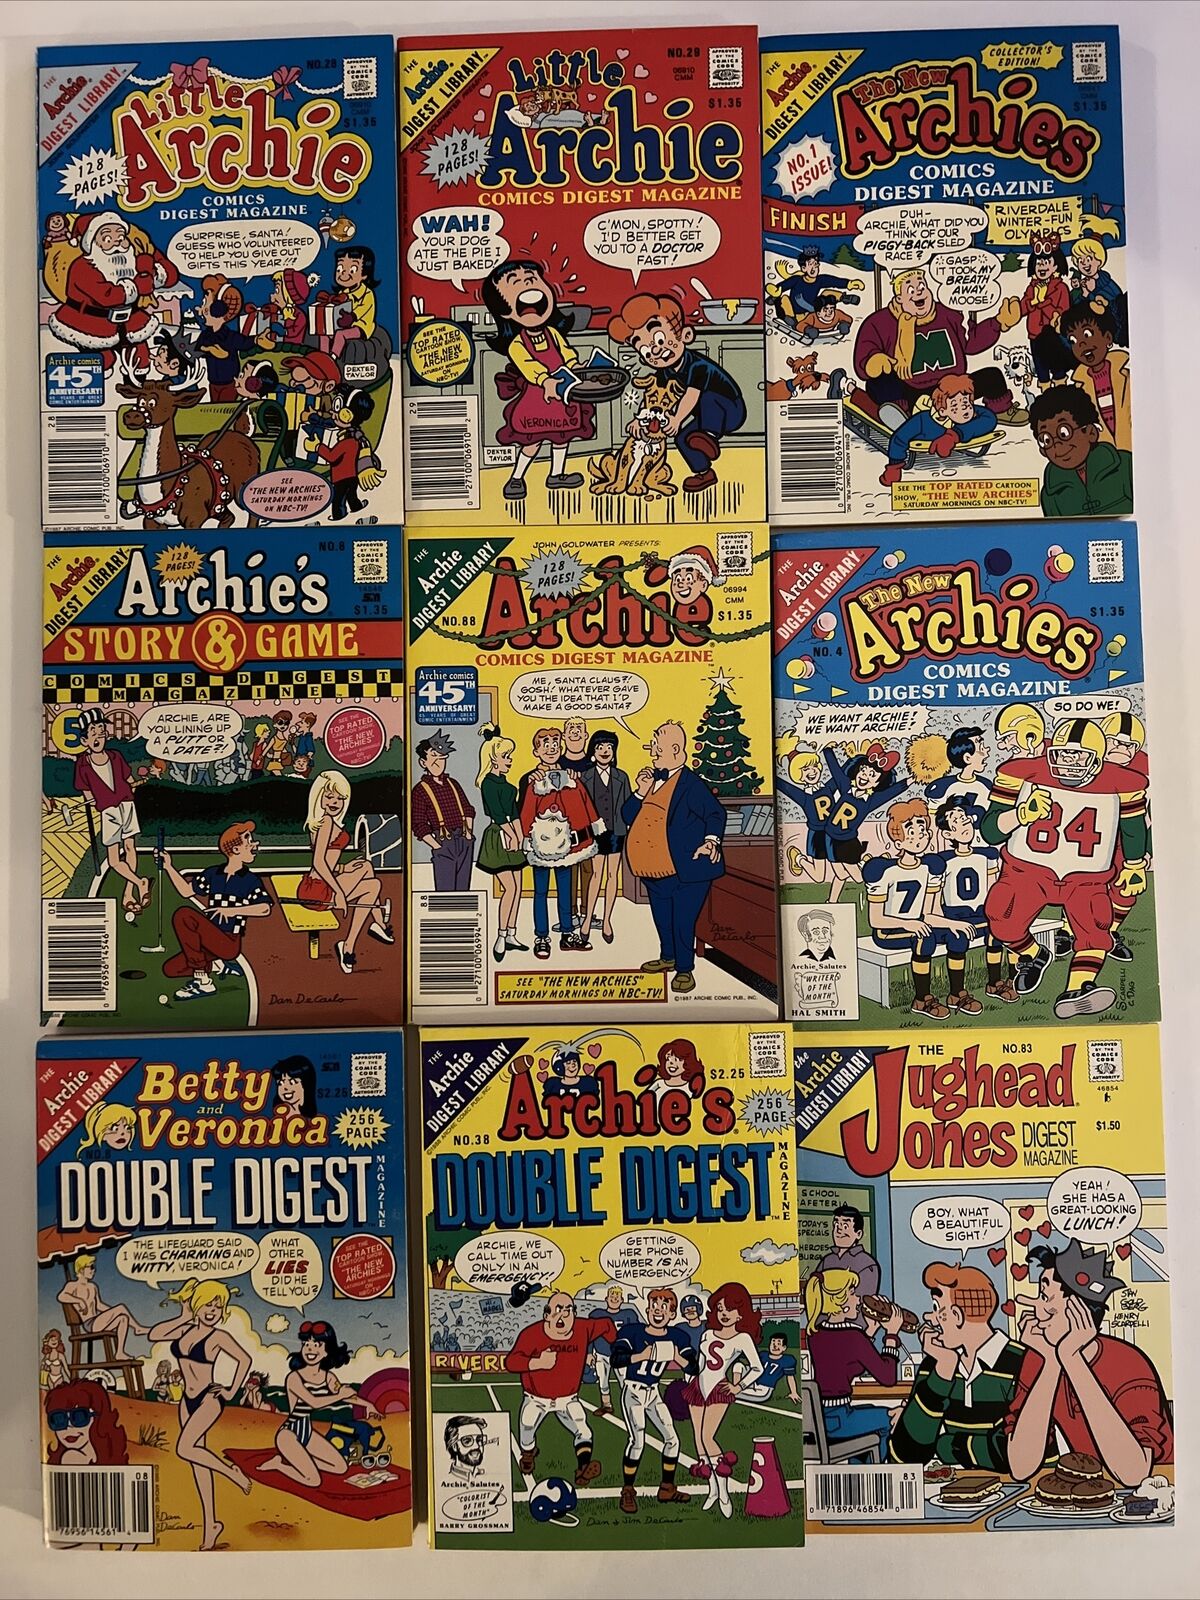 LOT OF 9 ARCHIE COMICS DIGESTS 1988 COMICS #1 NEW ARCHIES + COPPER AGE